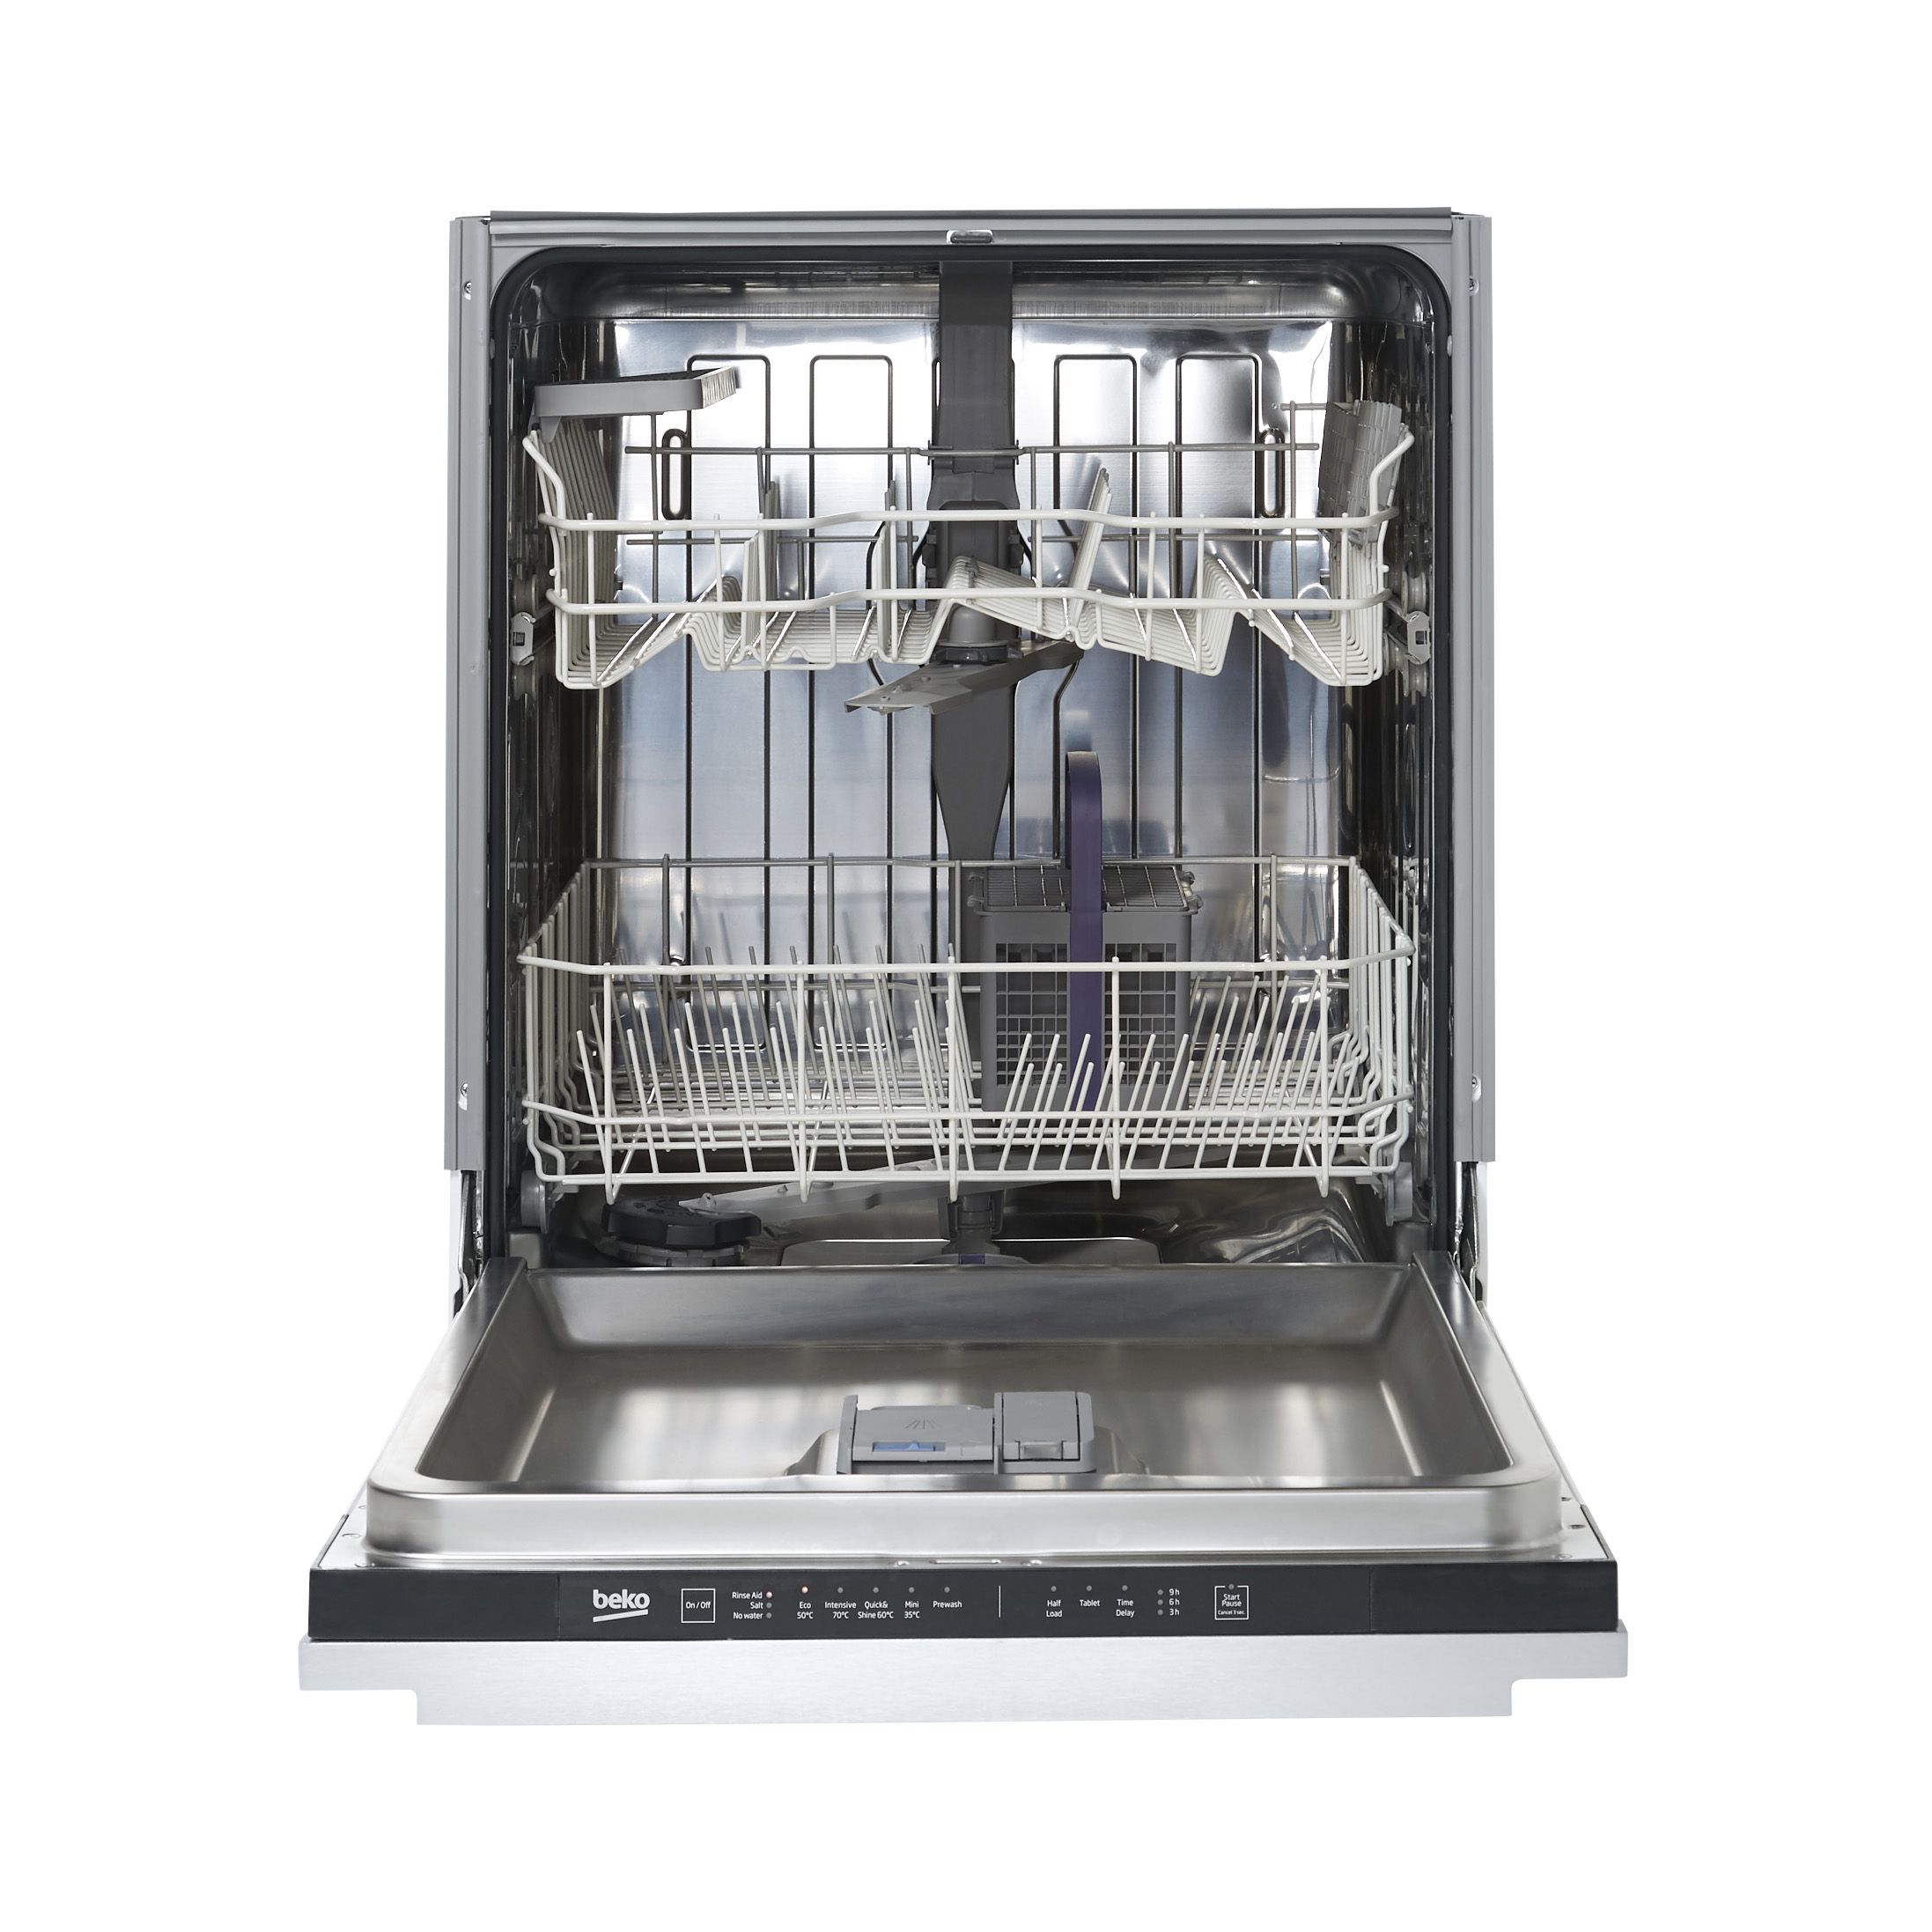 Beko DIN15Q10 Integrated Full size Dishwasher - Black & white